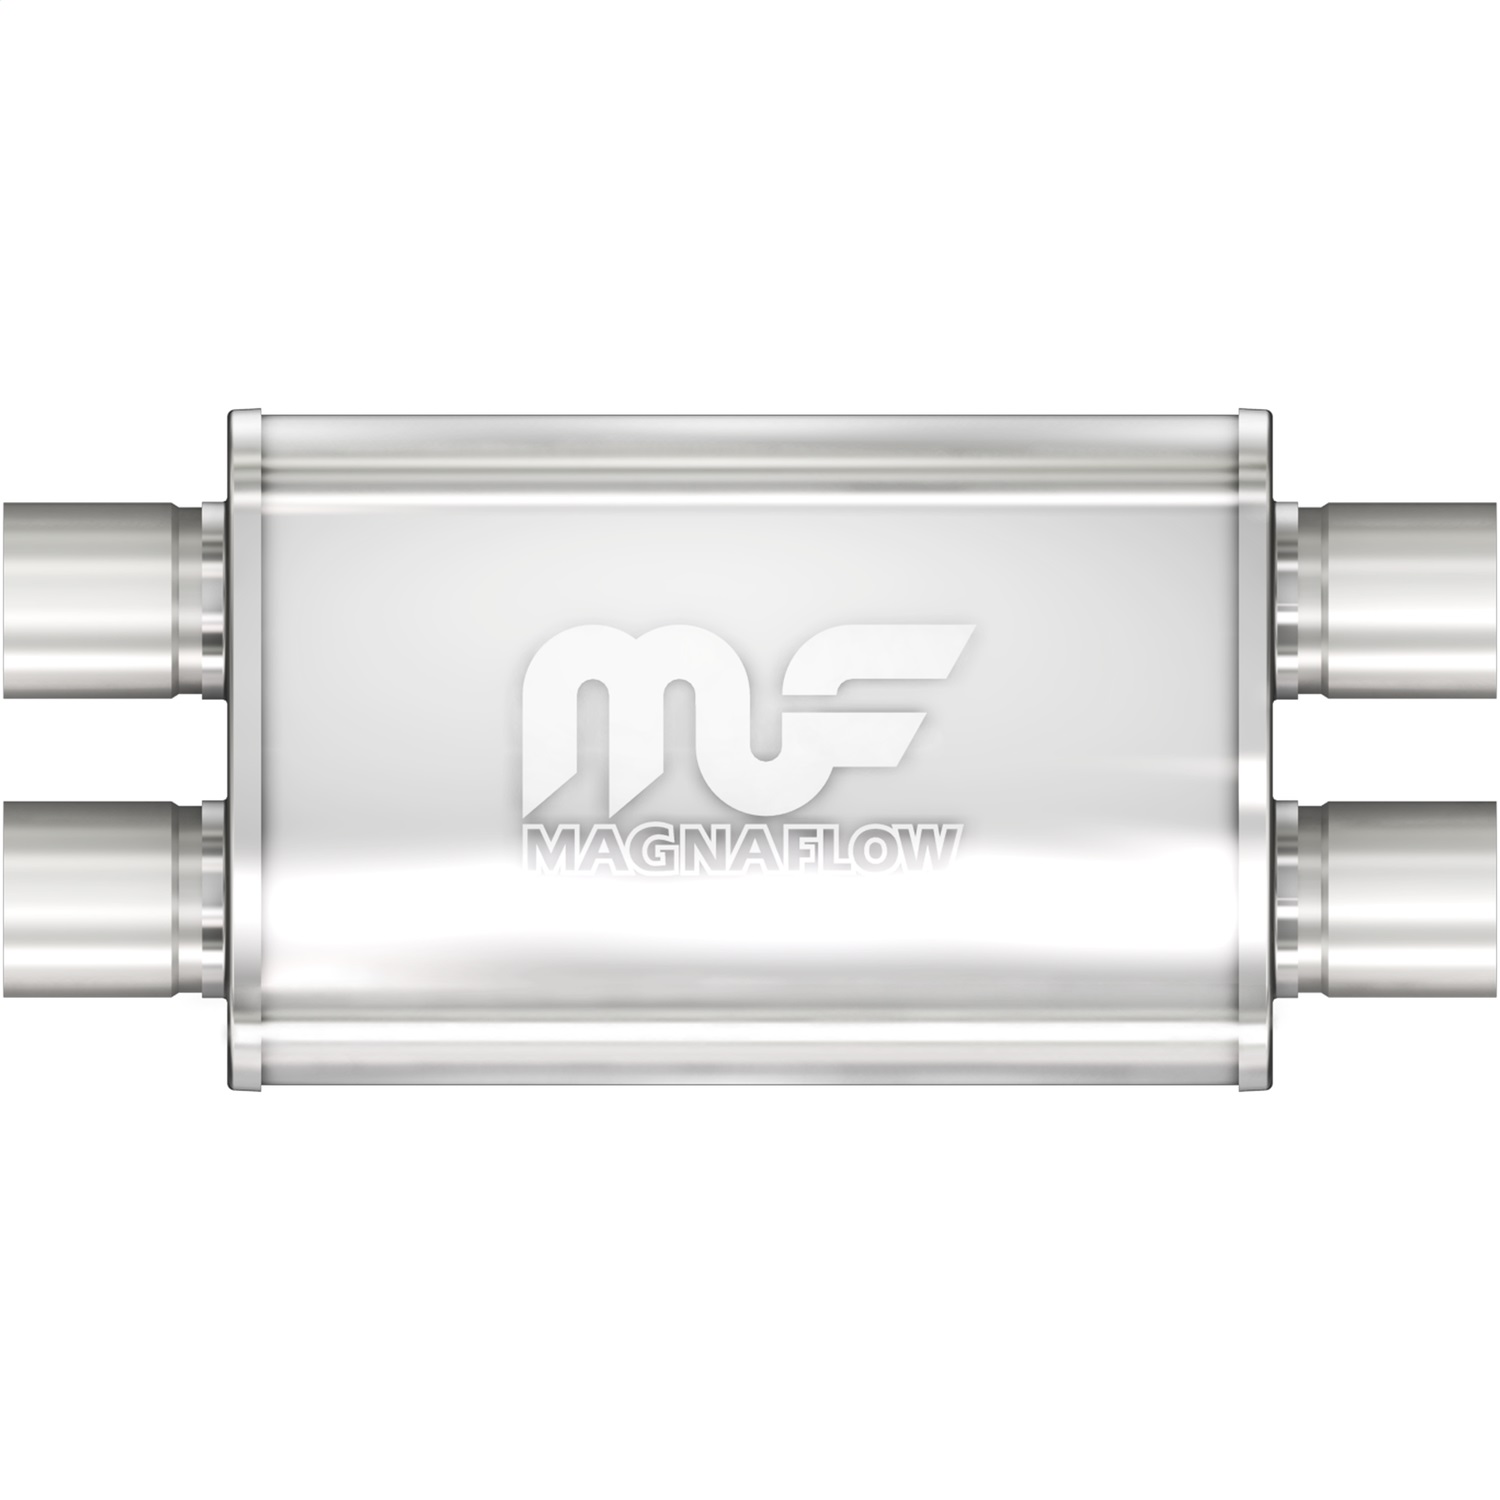 Magnaflow Performance Exhaust Magnaflow Performance Exhaust 11379 Stainless Steel Muffler